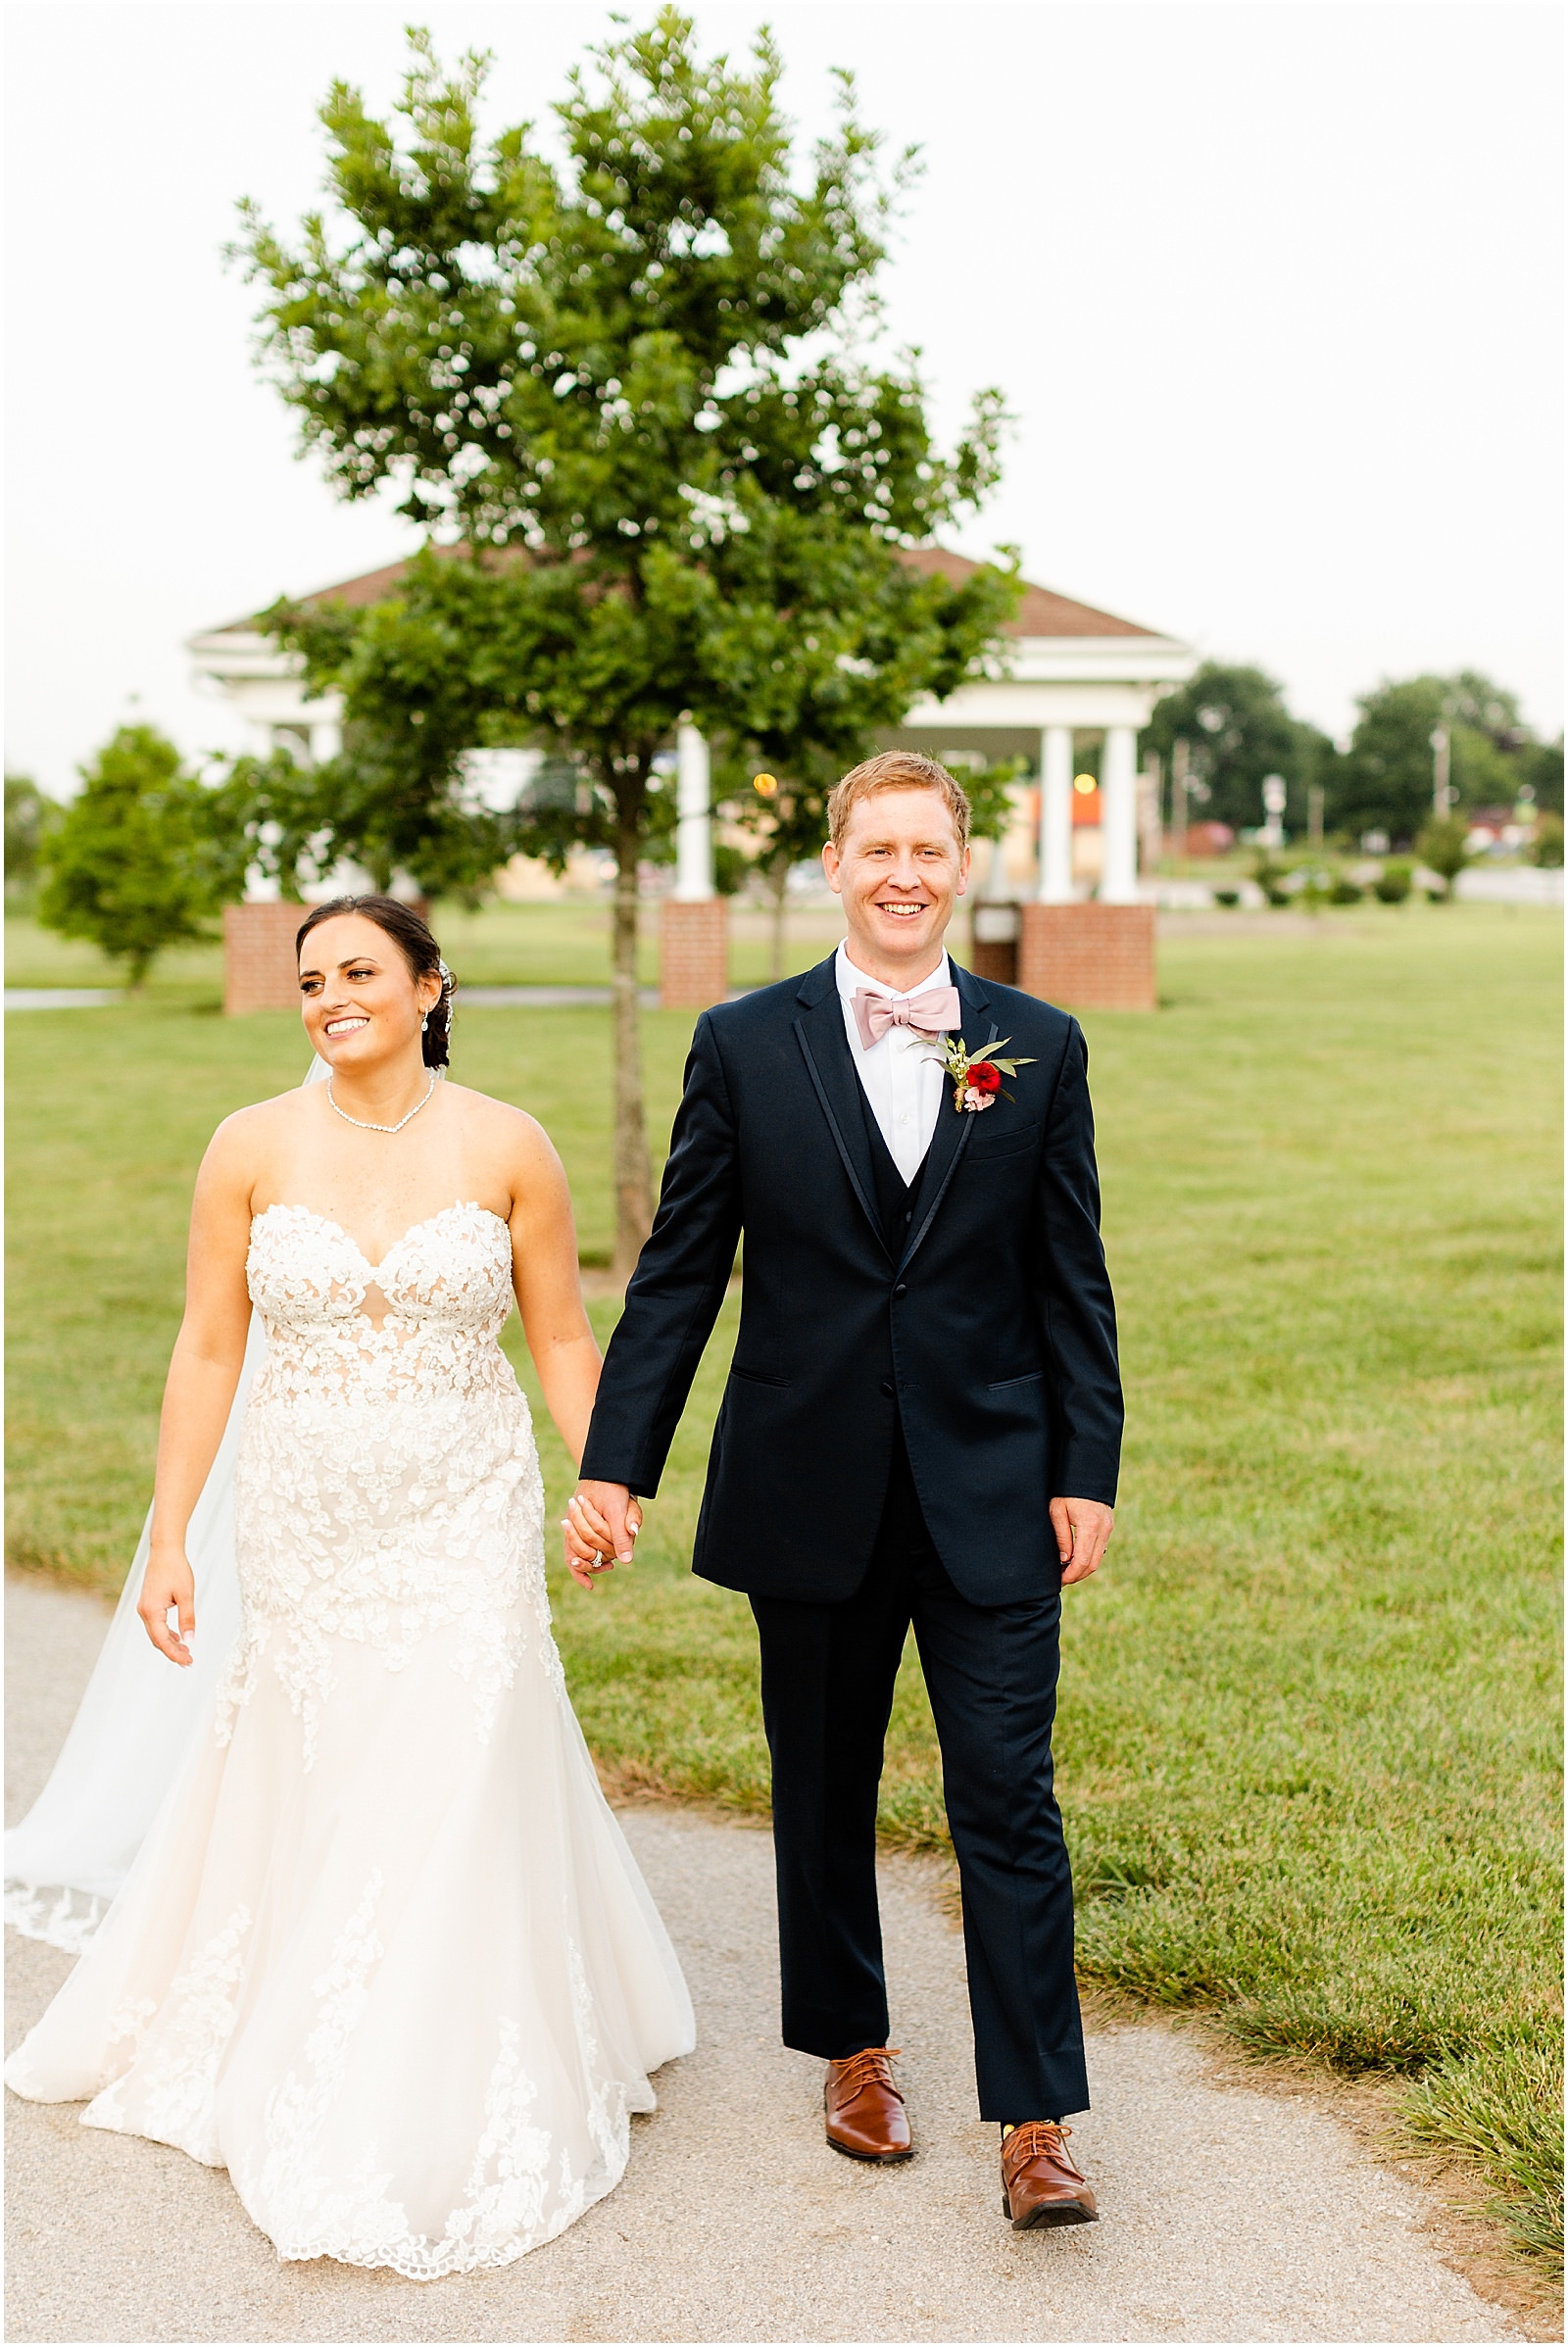 Deidra and Andrew | A Huntingburgh Indiana Wedding Bret and Brandie | Evansville Photographers | @bretandbrandie-0128.jpg